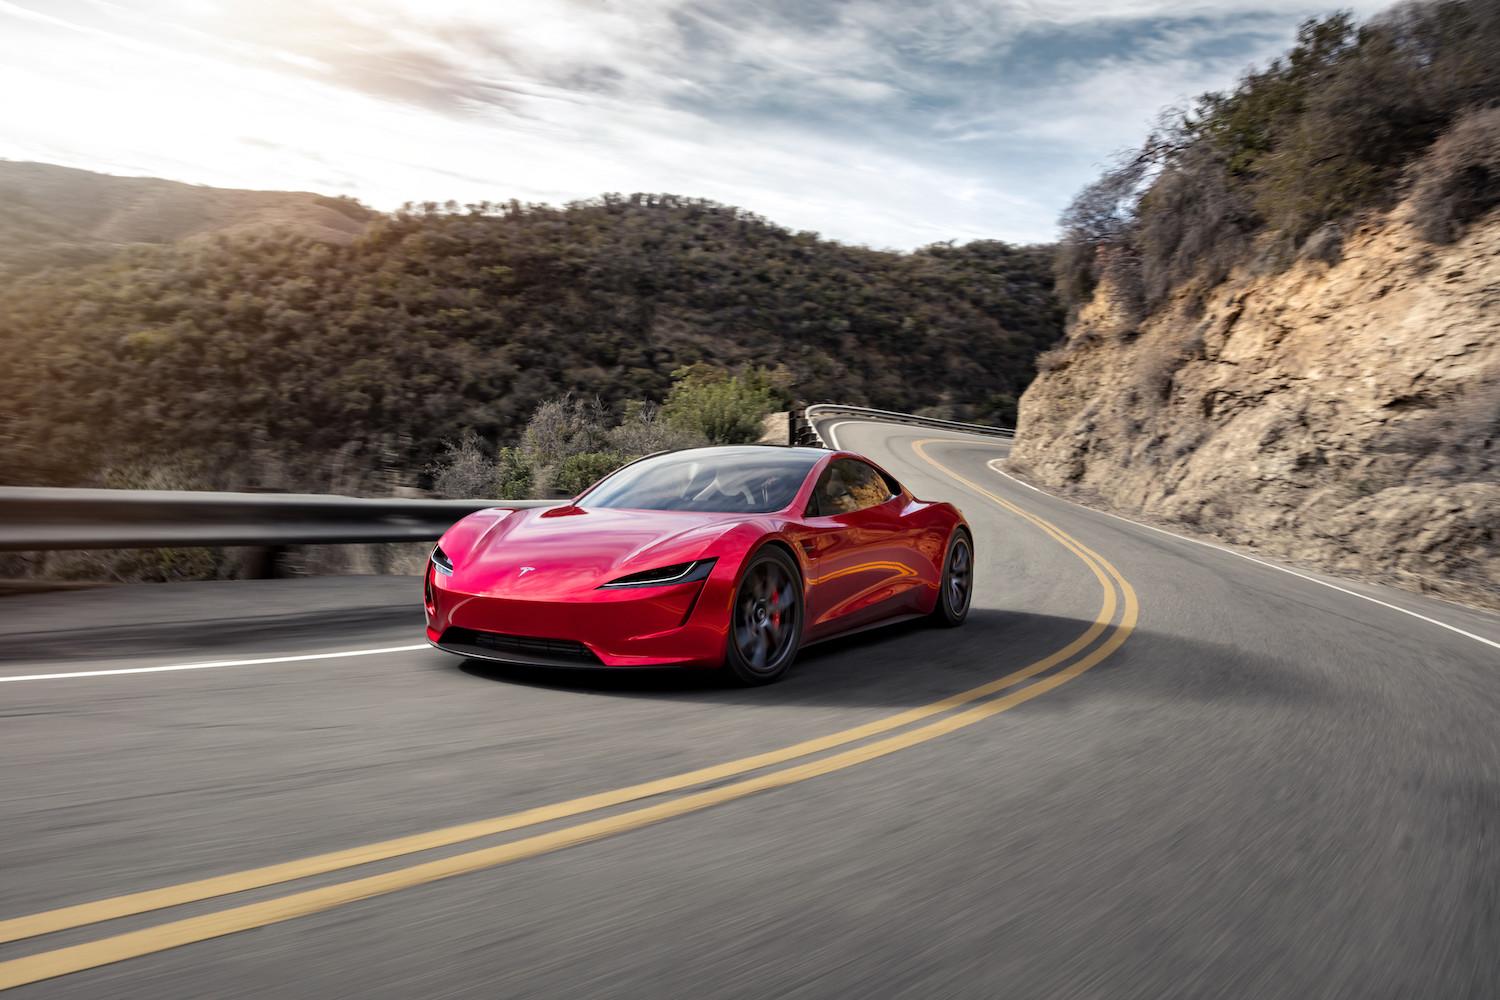 Tesla Roadster - Tesla Started with funds from DOE Loan Programs Office